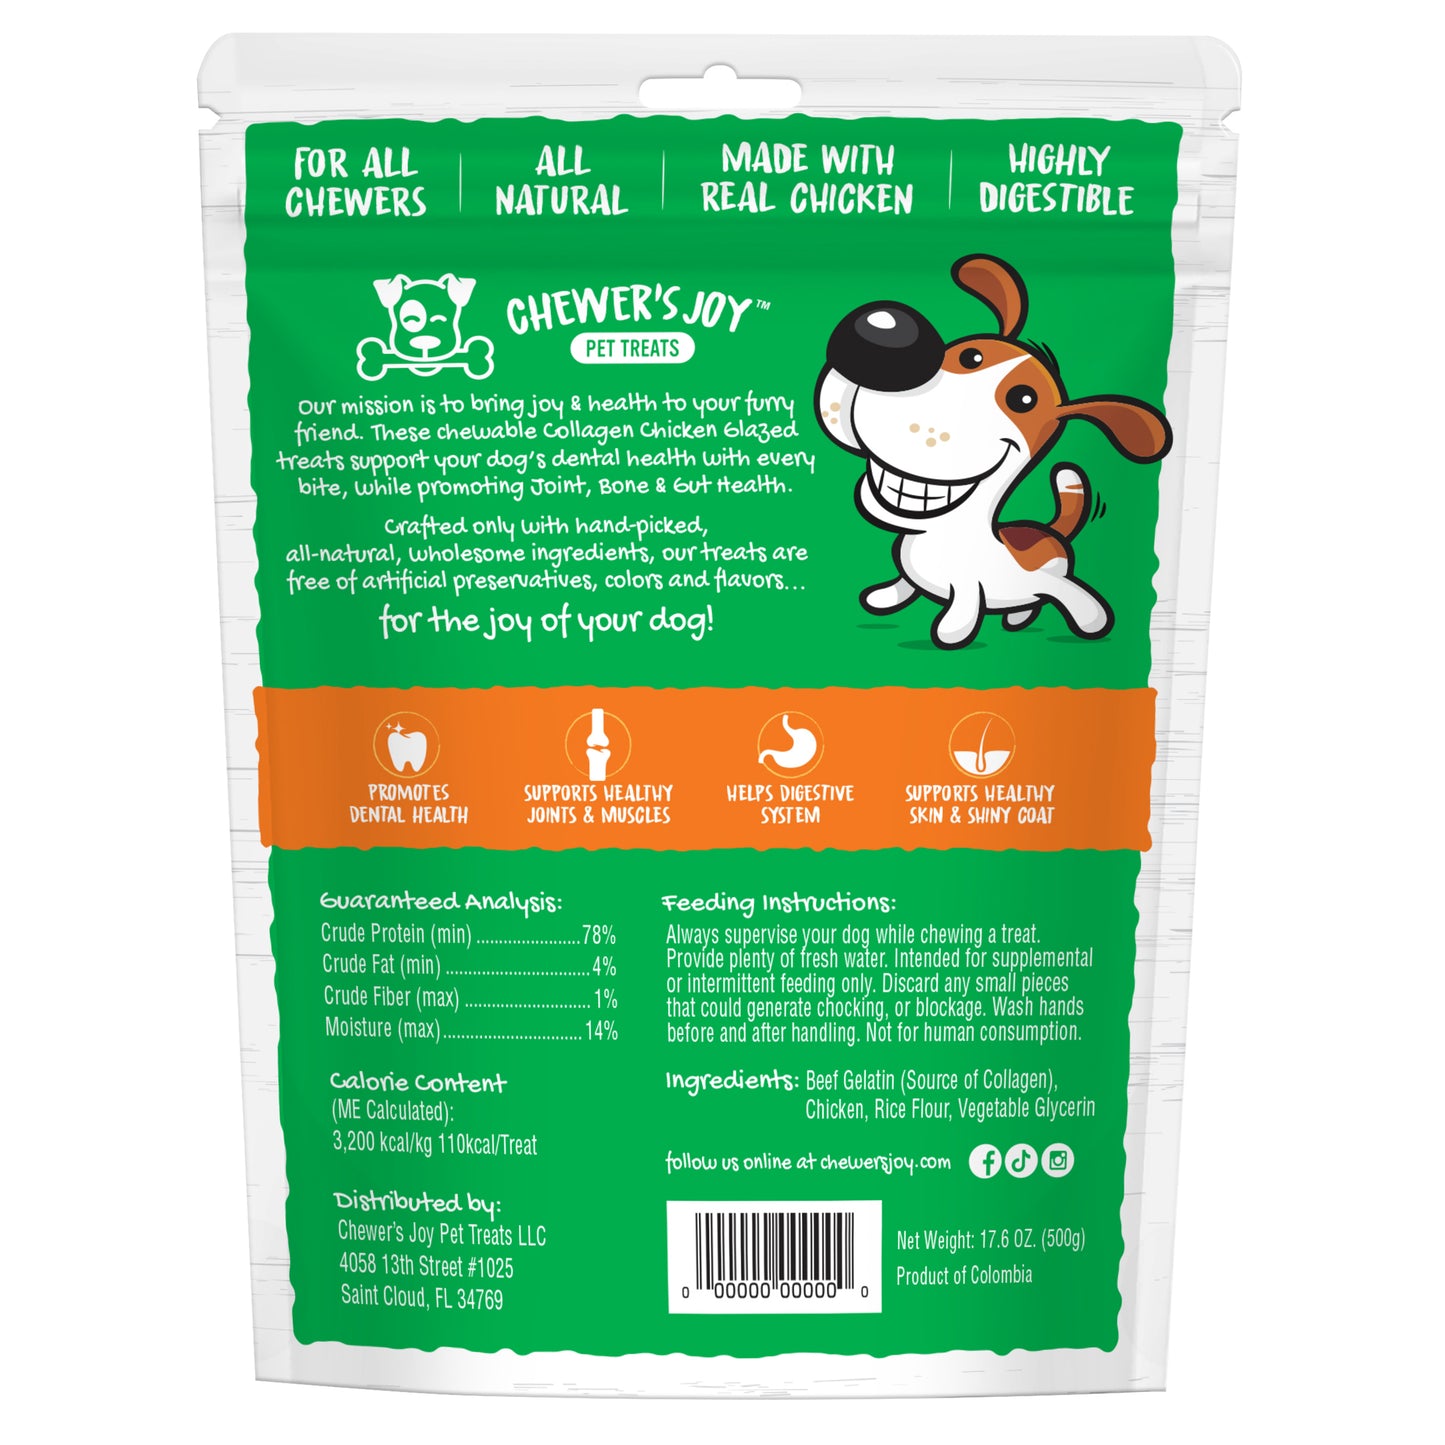 Chewer's Joy Large Variety Bundle Dog Treats: One of each 15pk collagen spring sticks, 15pk chicken glazed collagen tidbits, and 15pk tripe twist